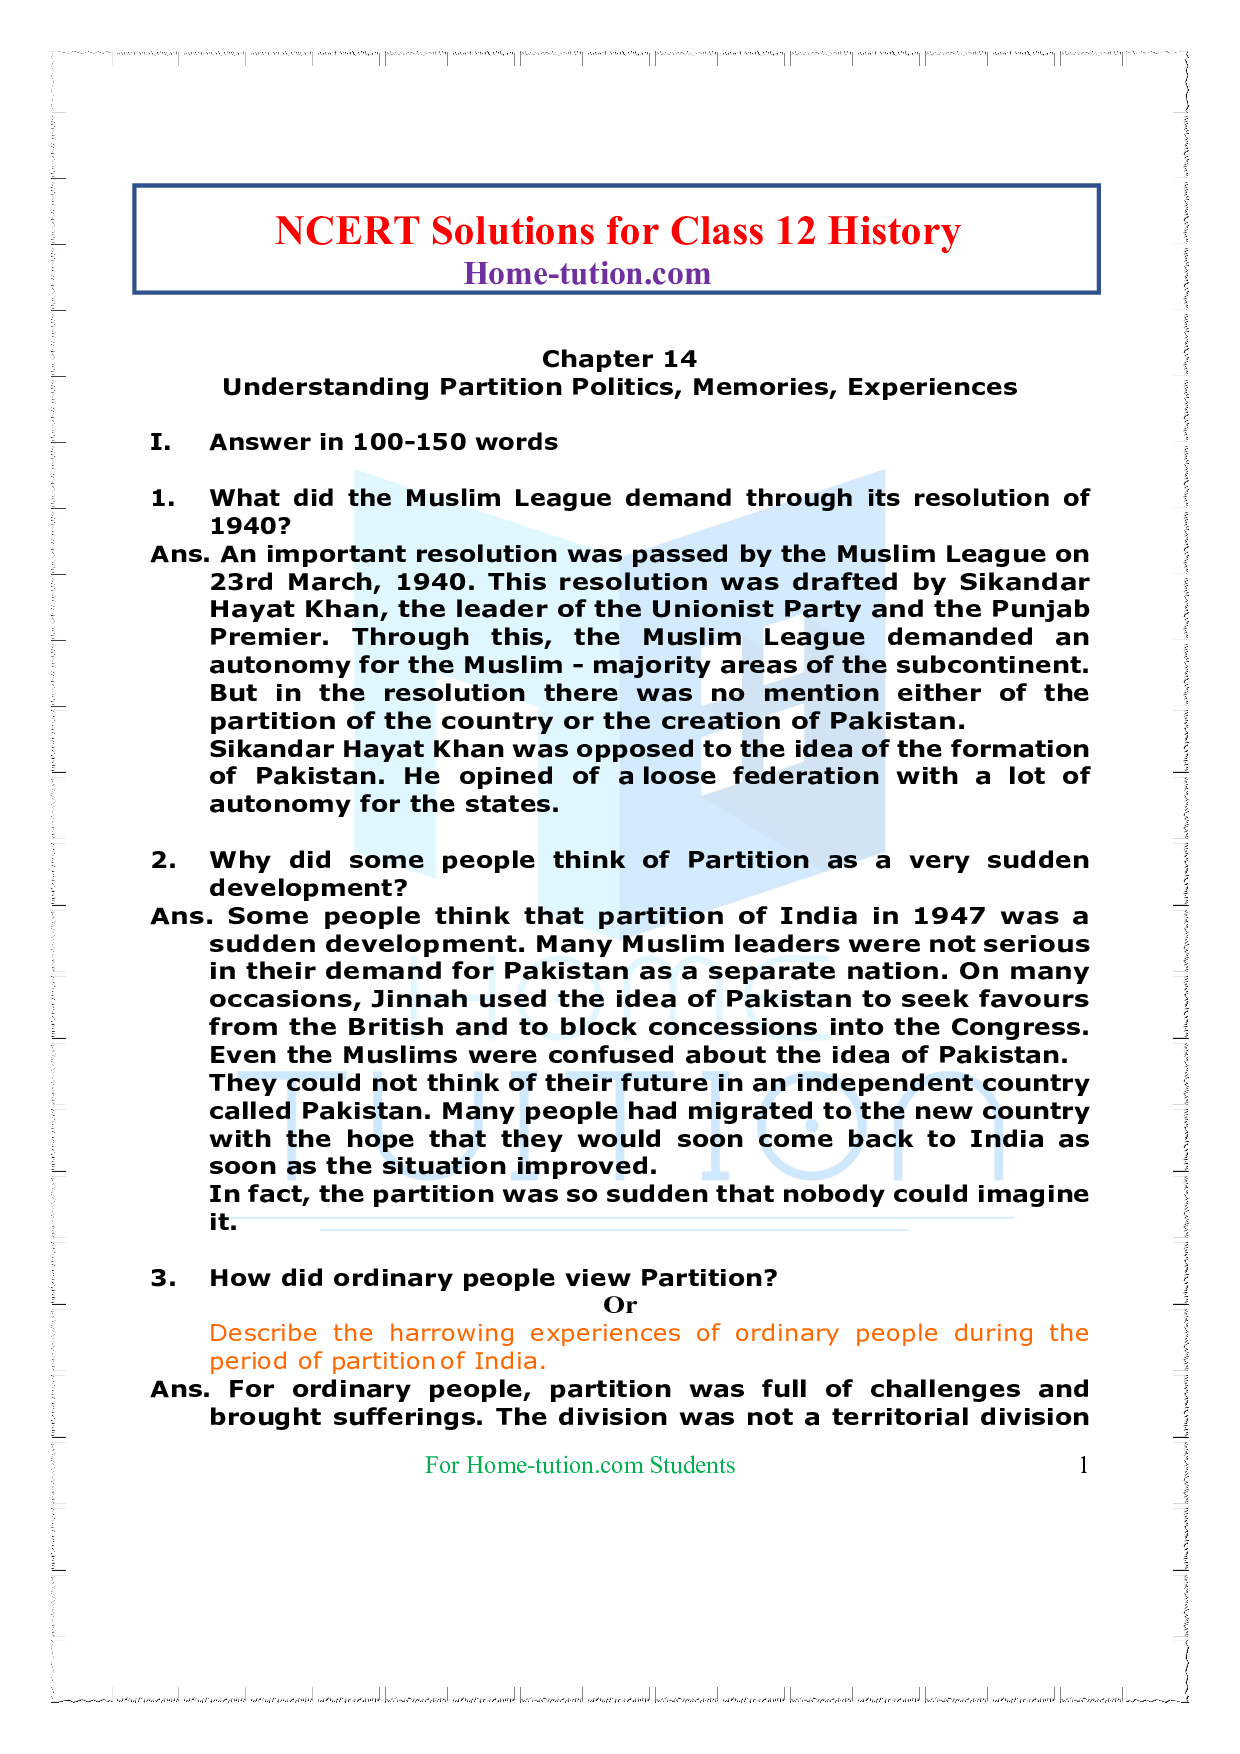 NCERT Solutions Chapter 14 Understanding partition politics, memories, experiences